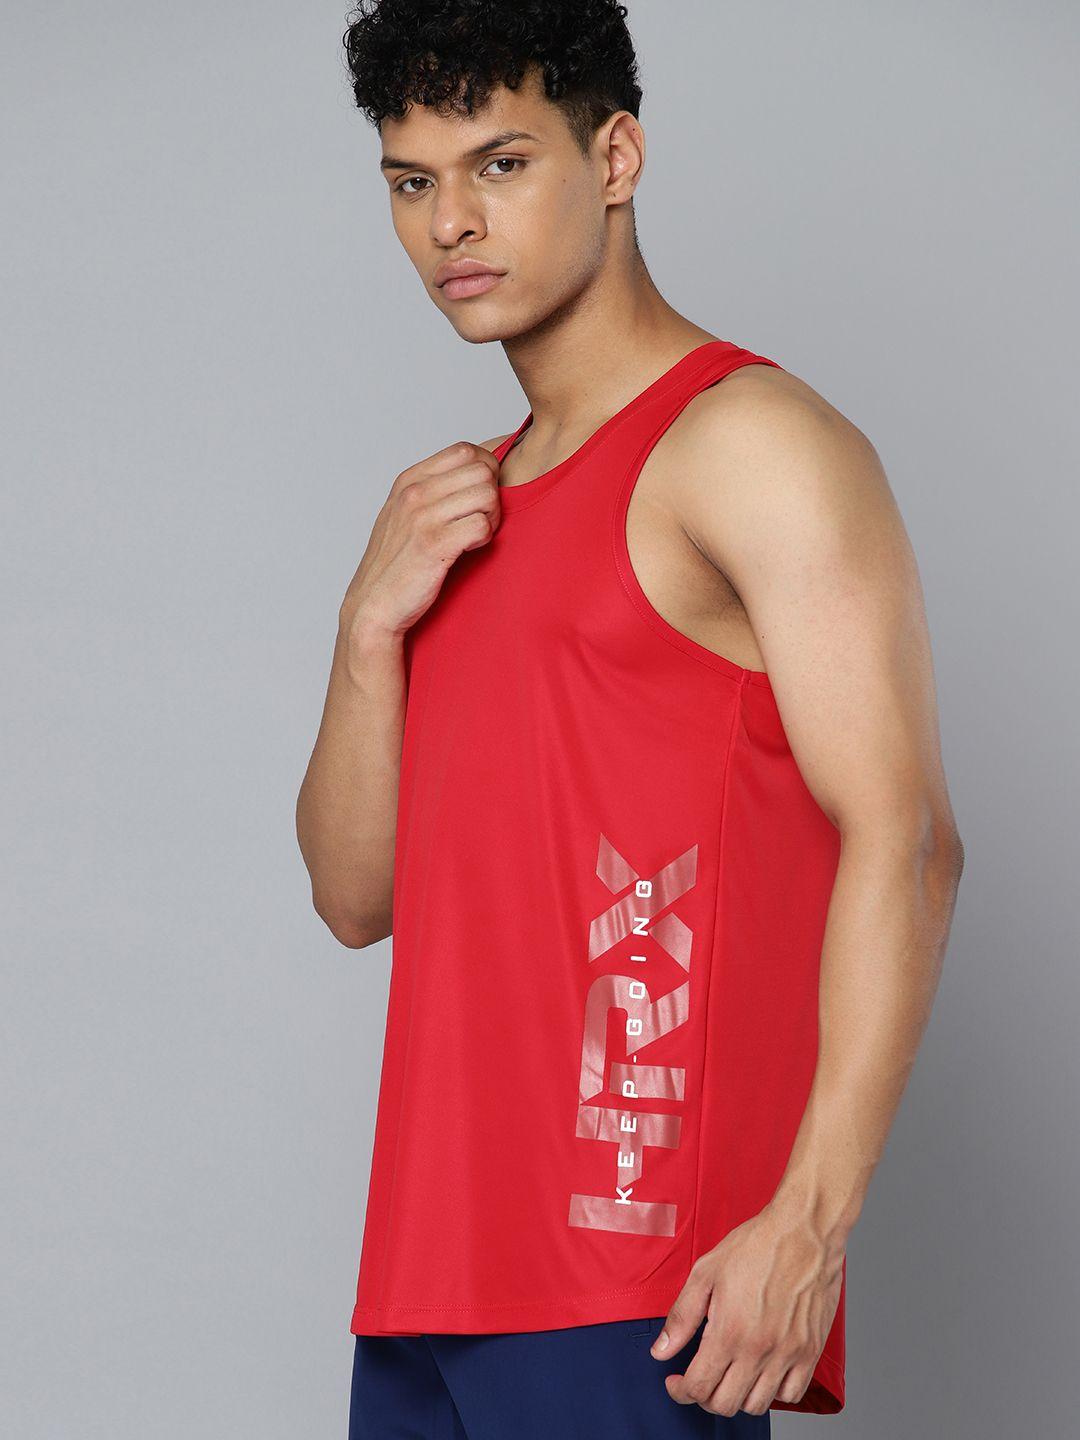 hrx by hrithik roshan rapid-dry brand logo printed sleeveless training t-shirt